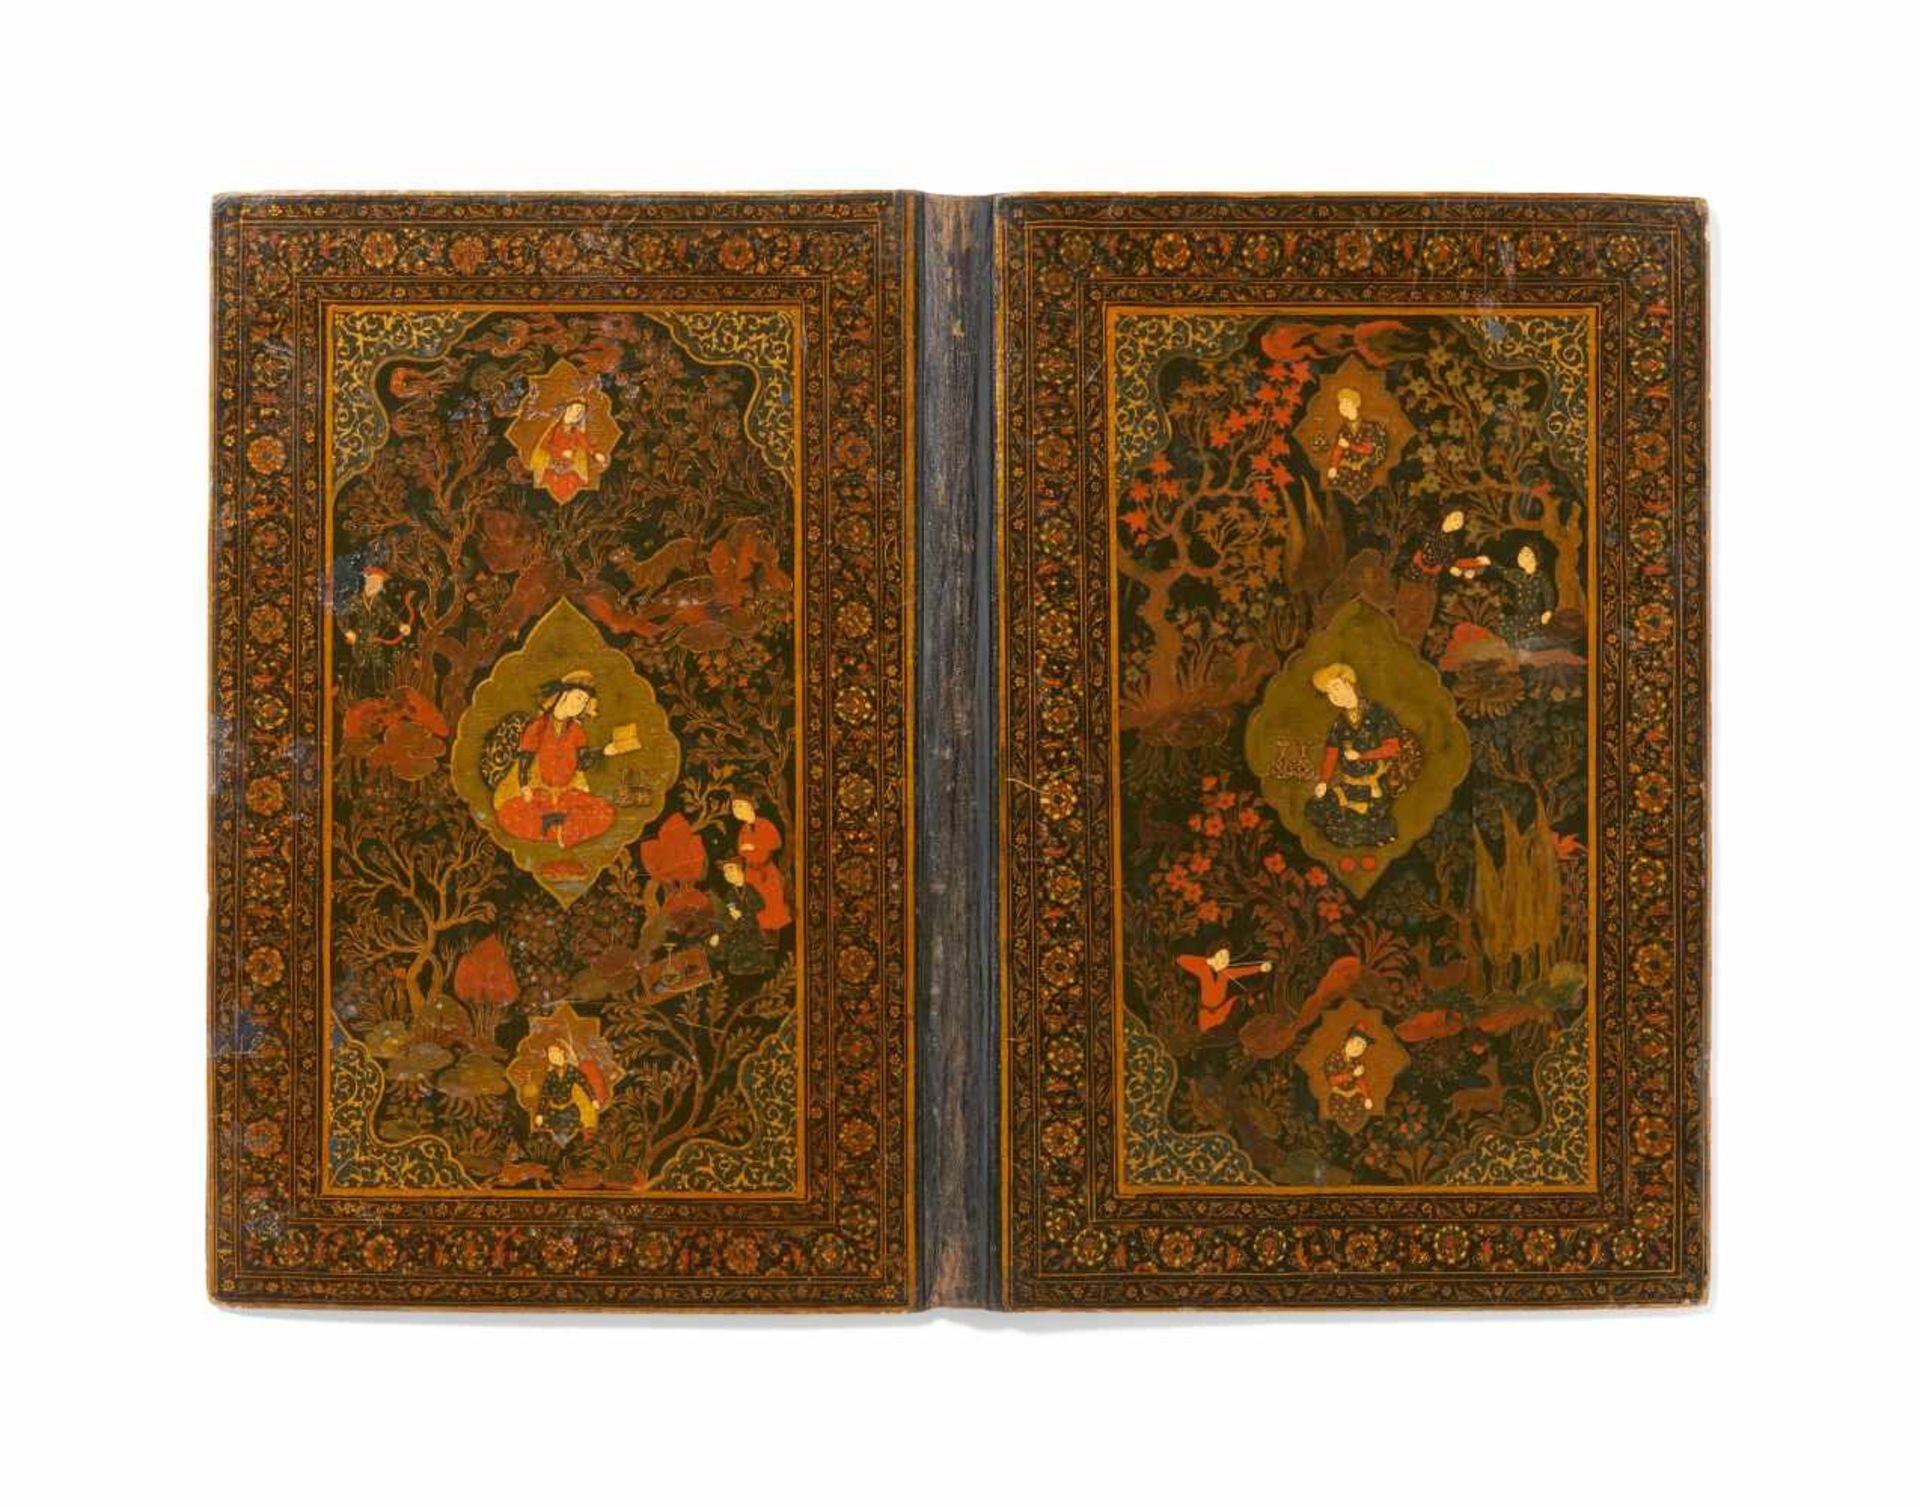 BEDEUTENDER REICH BEMALTER BUCHEINBAND (JILD-I KITAB). Persien. Safavid-(1501-1722) oder Qajar-